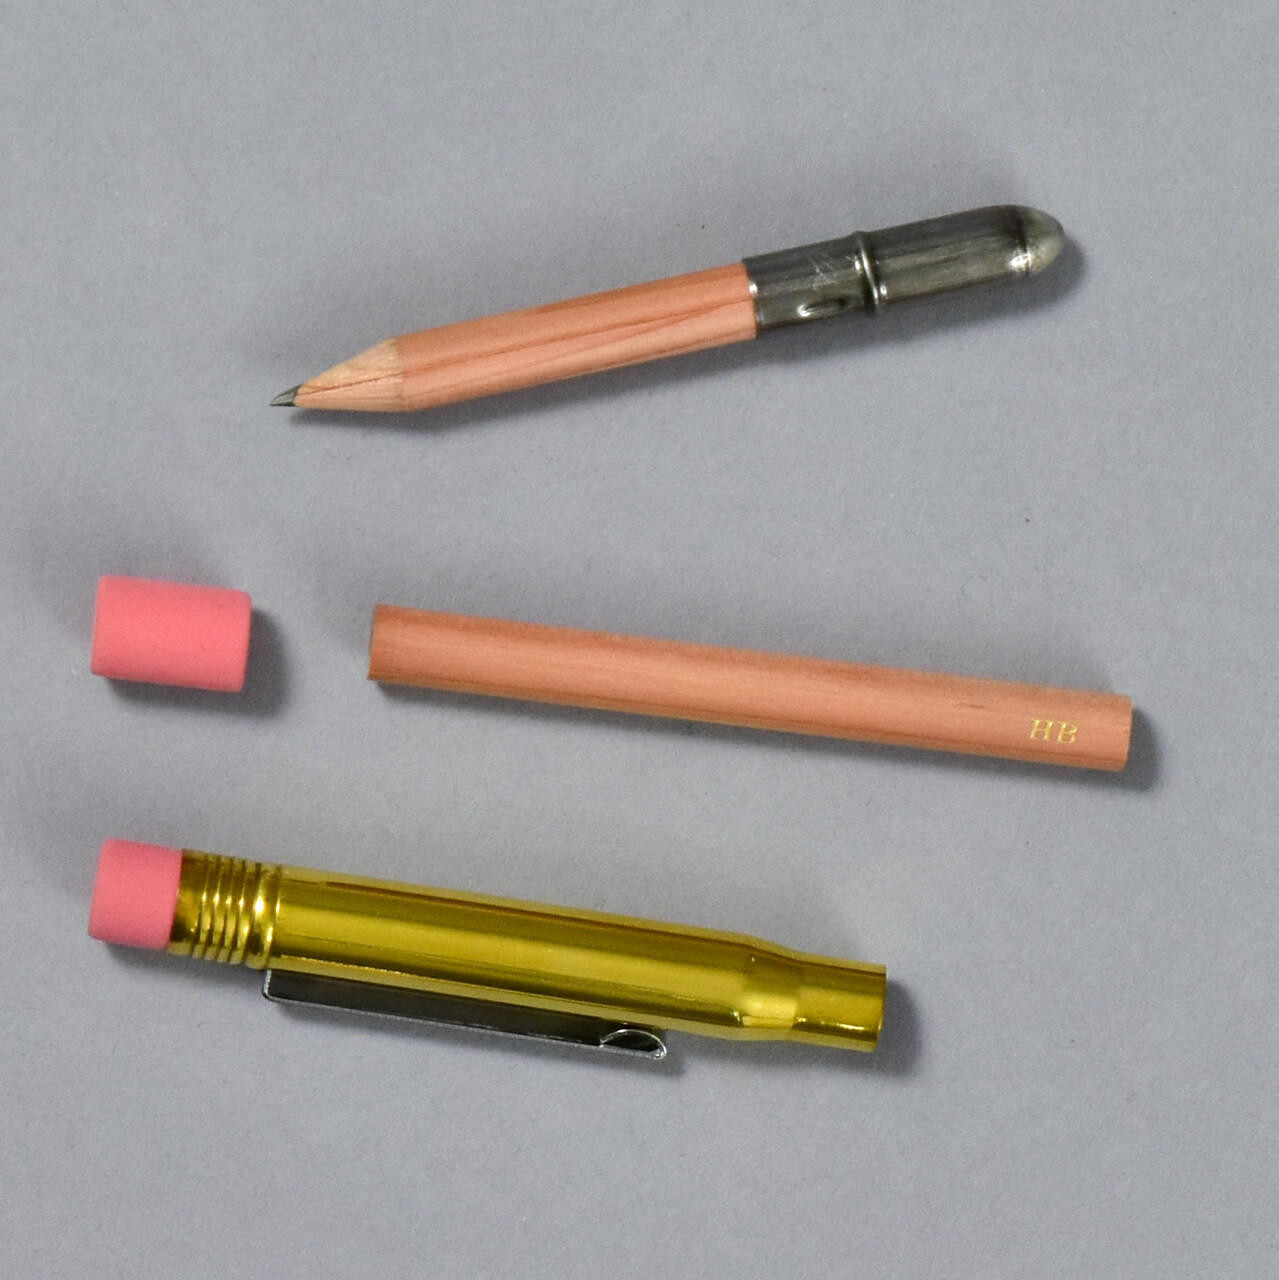 Traveler's Company Brass Pencil and Eraser Refills - Philadelphia